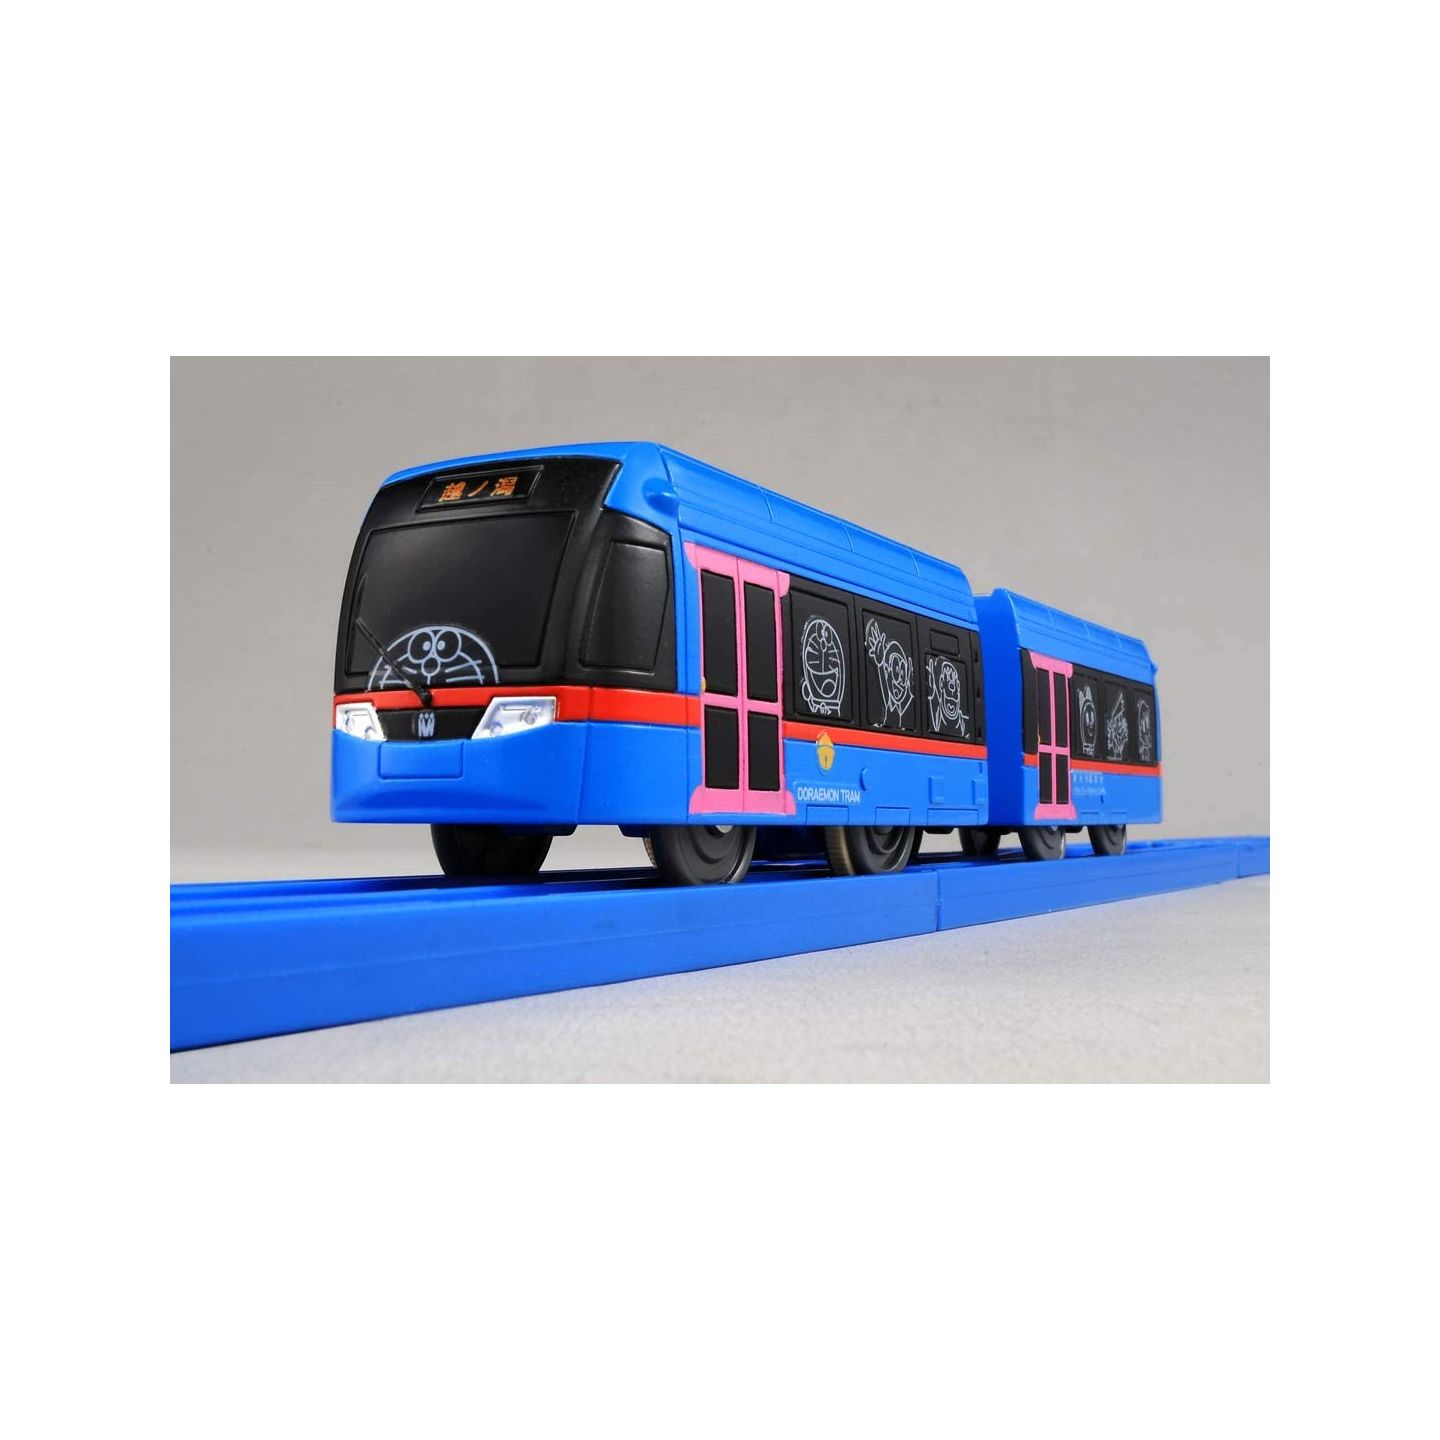 Takara Tomy Plarail Train Sc-06 Manyosen 1000 Doraemon Tram for sale online 